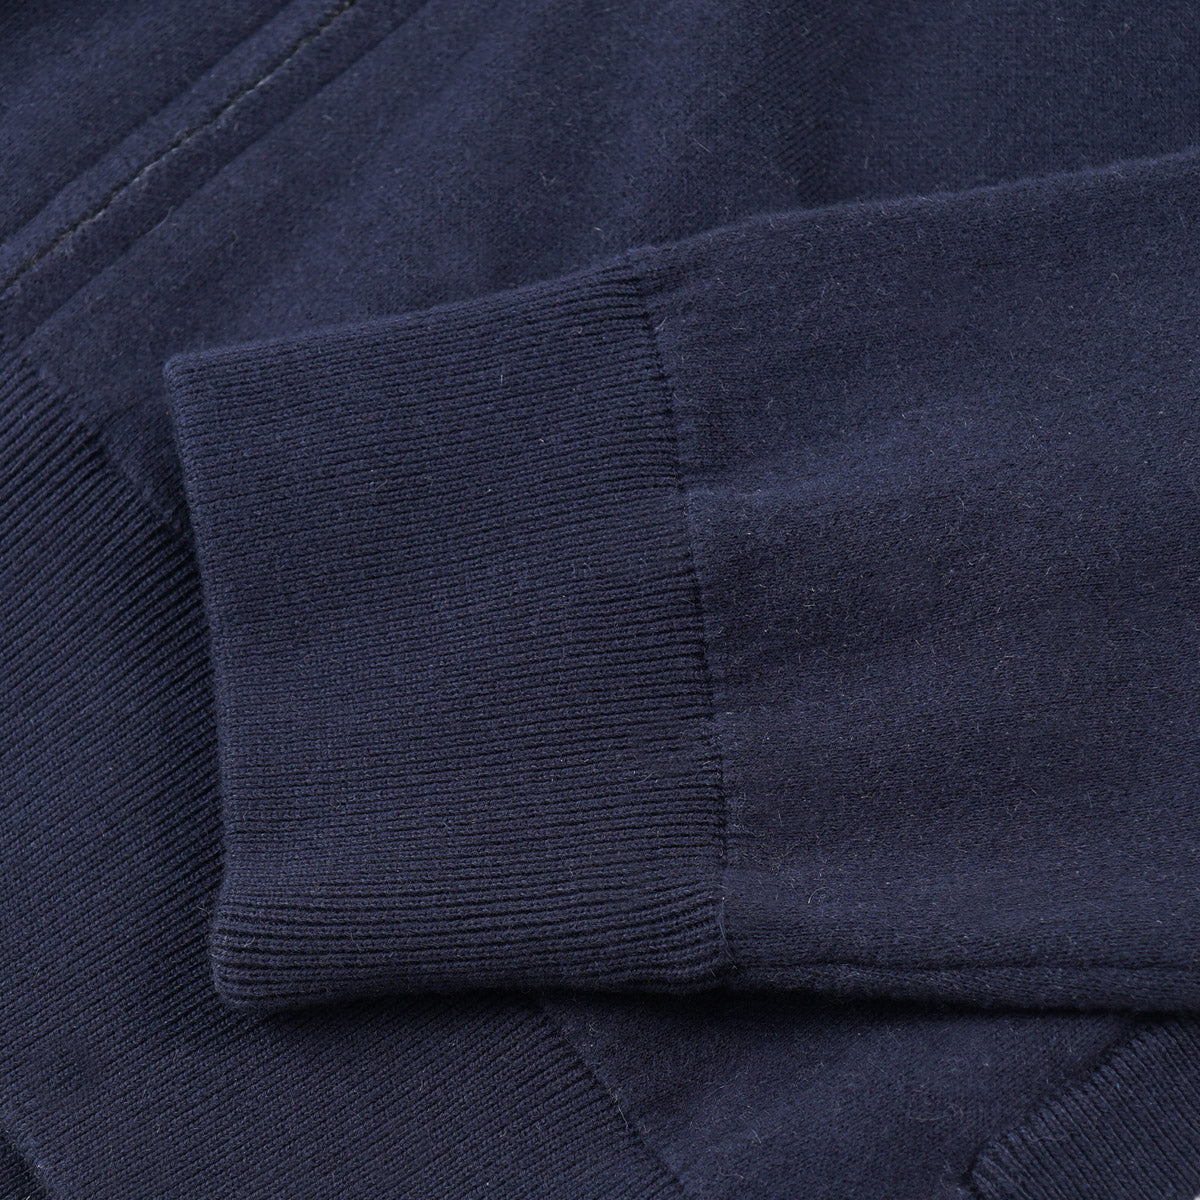 Boglioli Hooded Cotton and Cashmere Sweater - Top Shelf Apparel